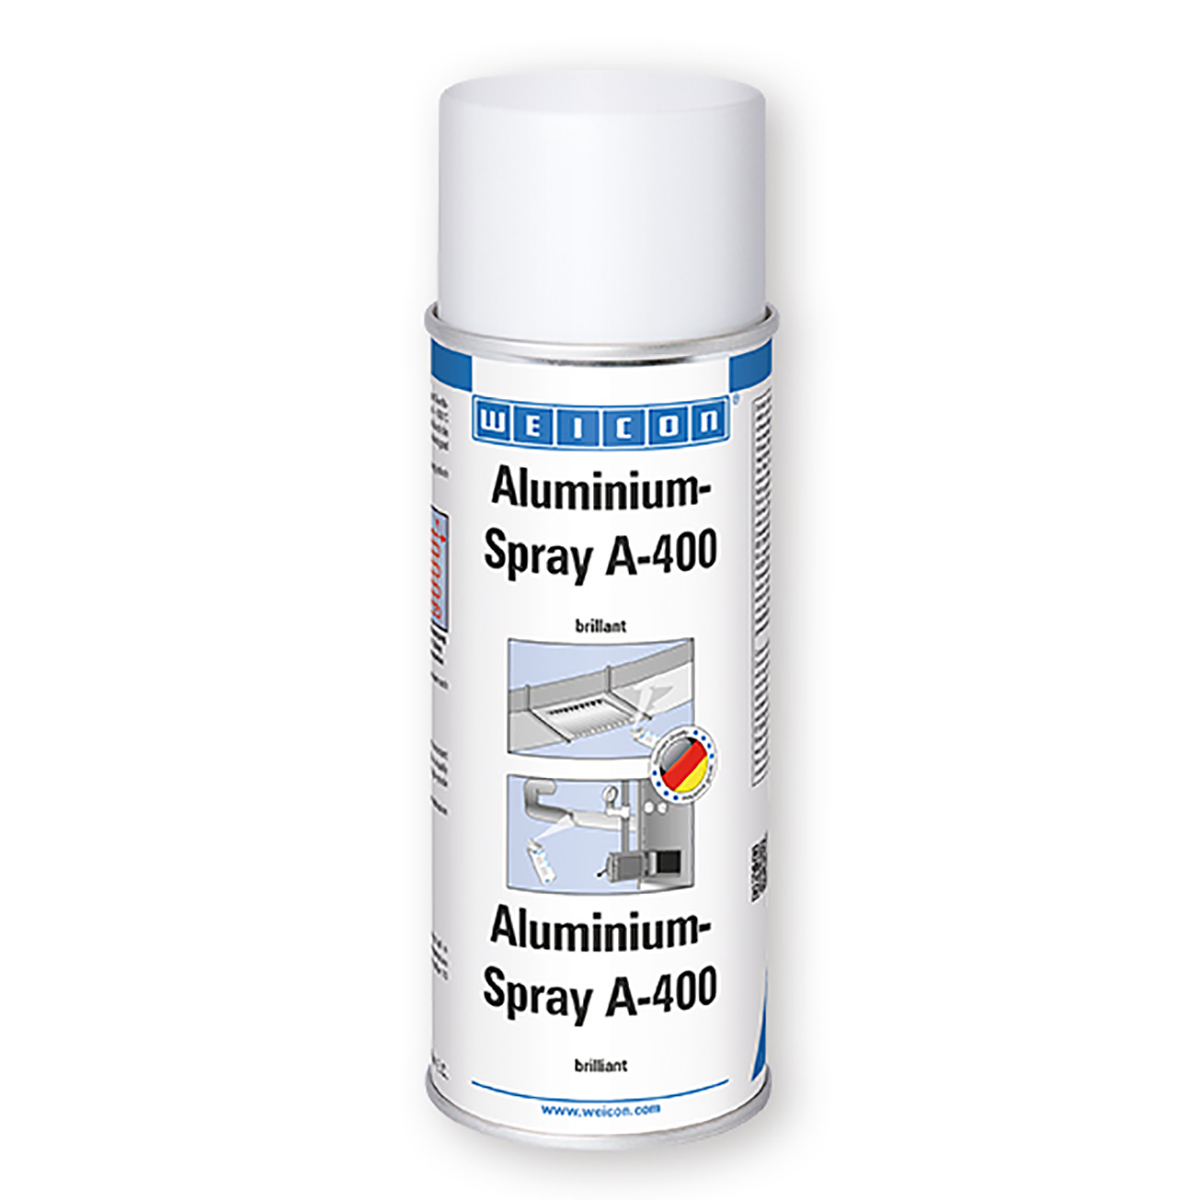 Weicon Aluminium Spray A400 – High Brilliance - exa_11051400